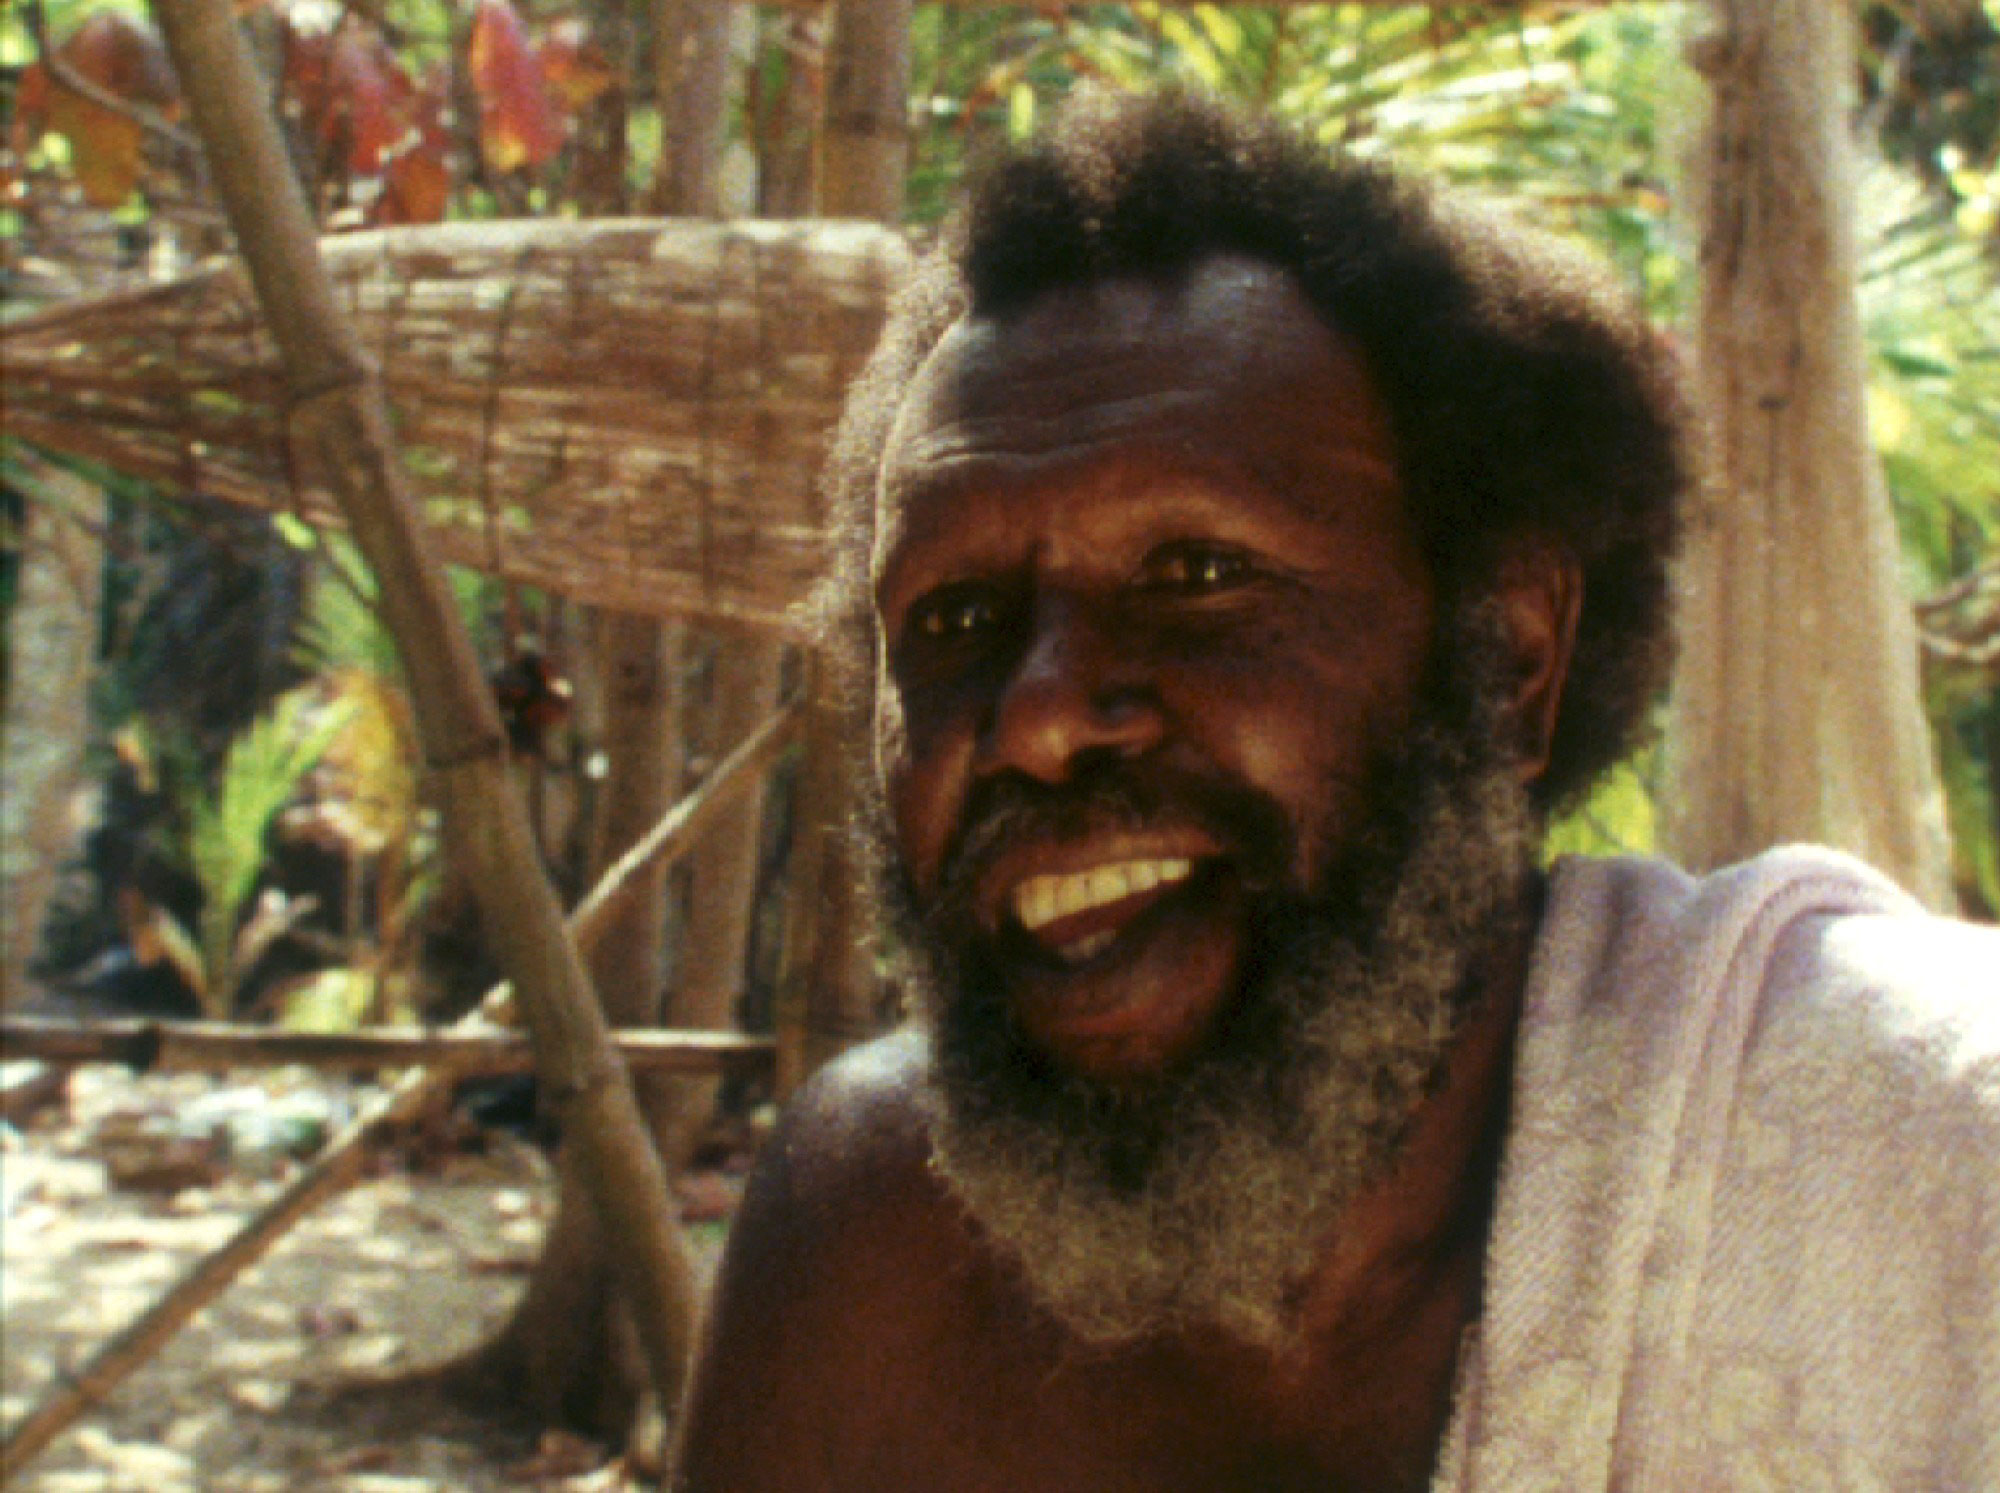 Eddie Koiki Mabo at Las, on Mer (Murray Island), 1989.